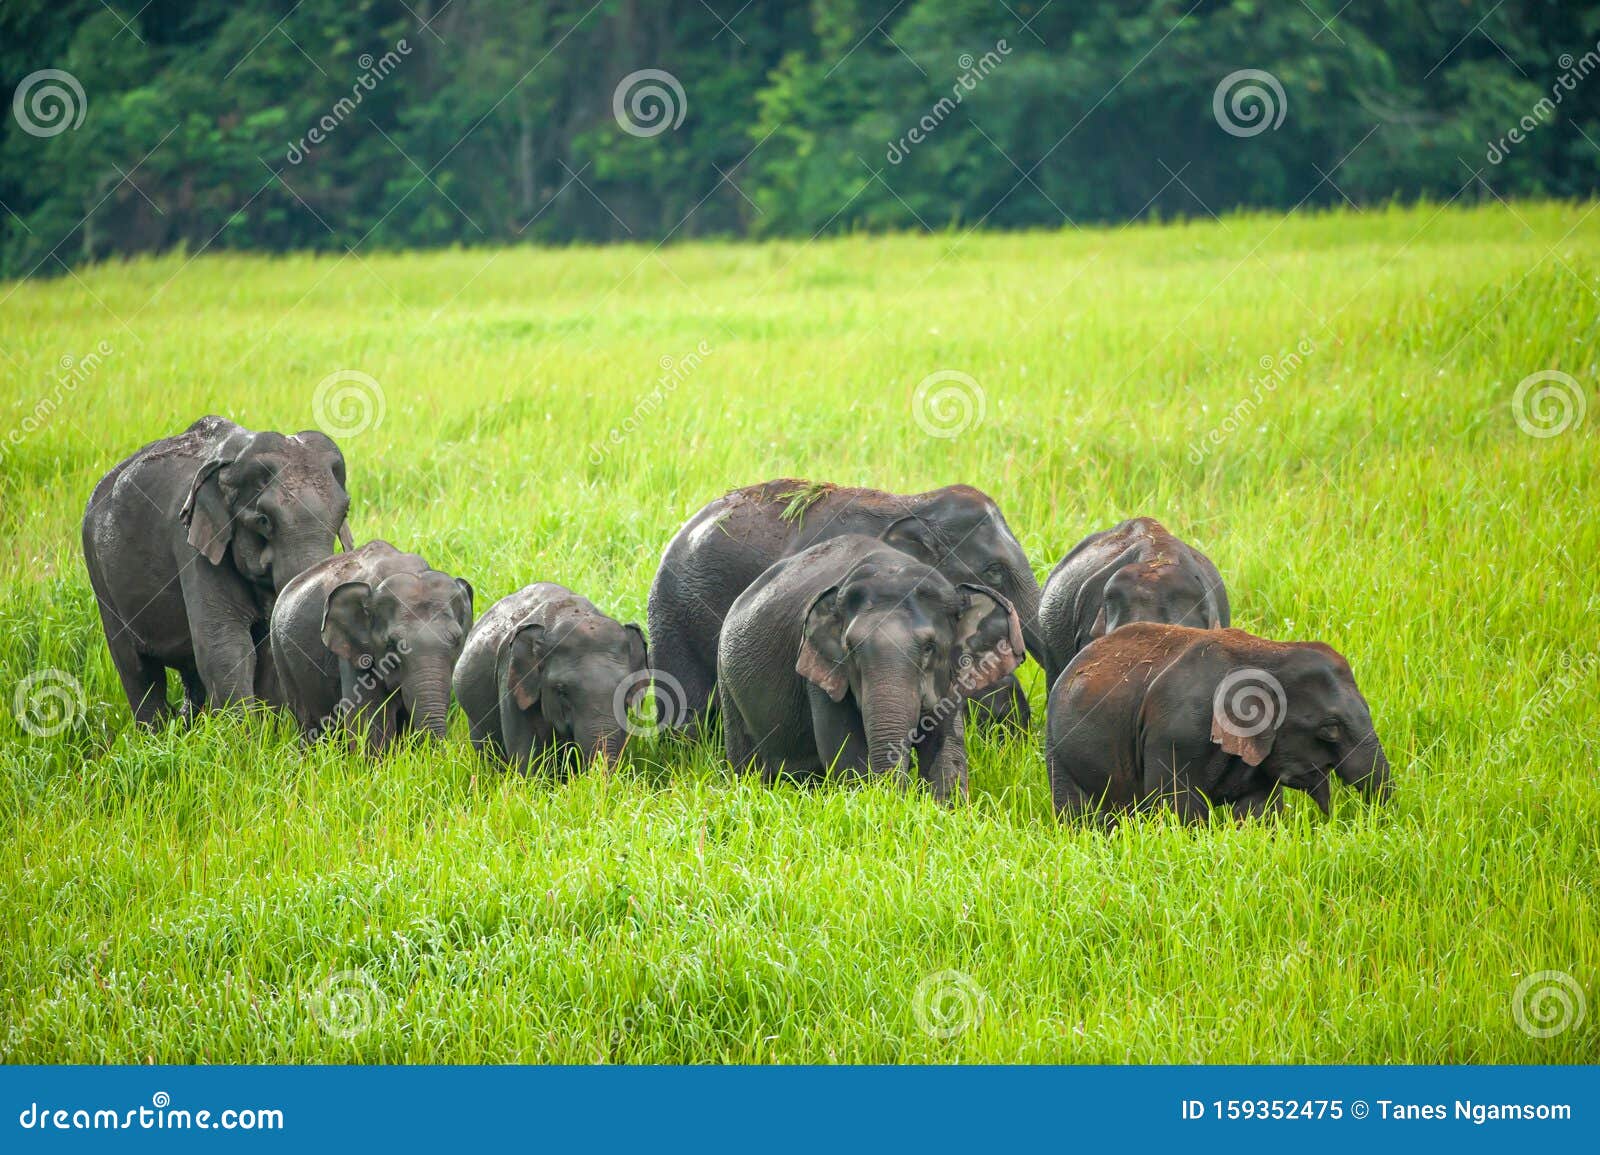 a herd of asian elephants feeding in the green grassland